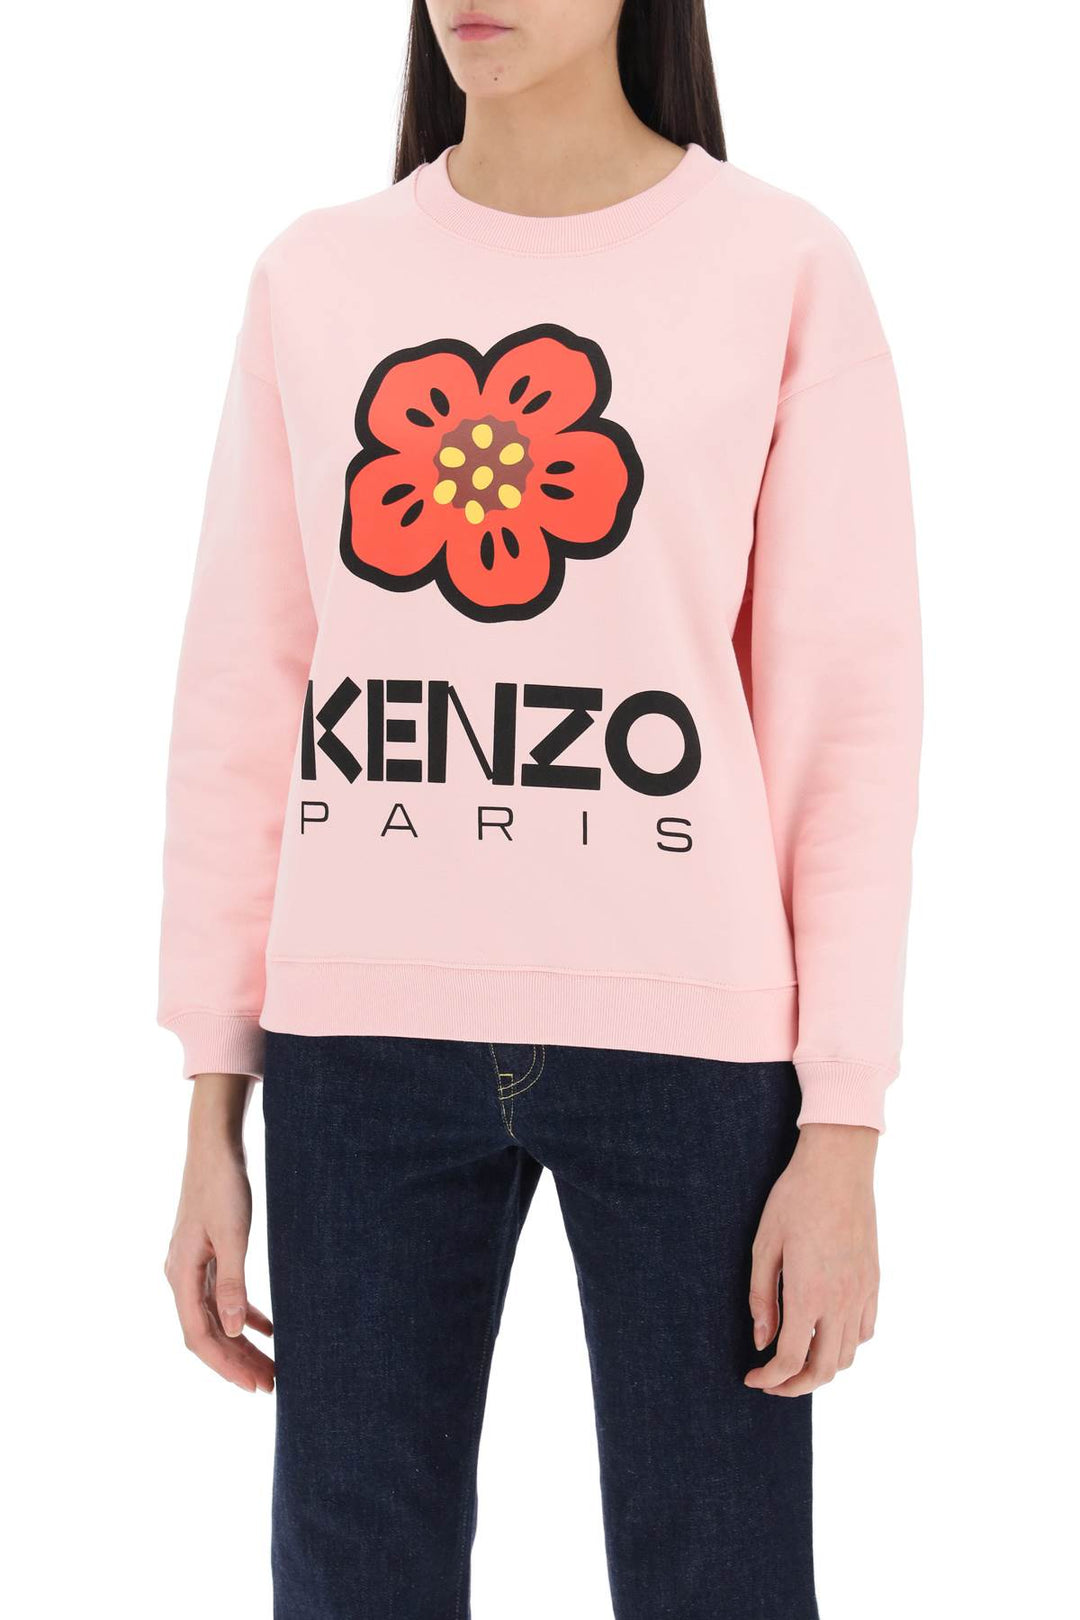 Kenzo Bokè Flower Crew Neck Sweatshirt   Pink